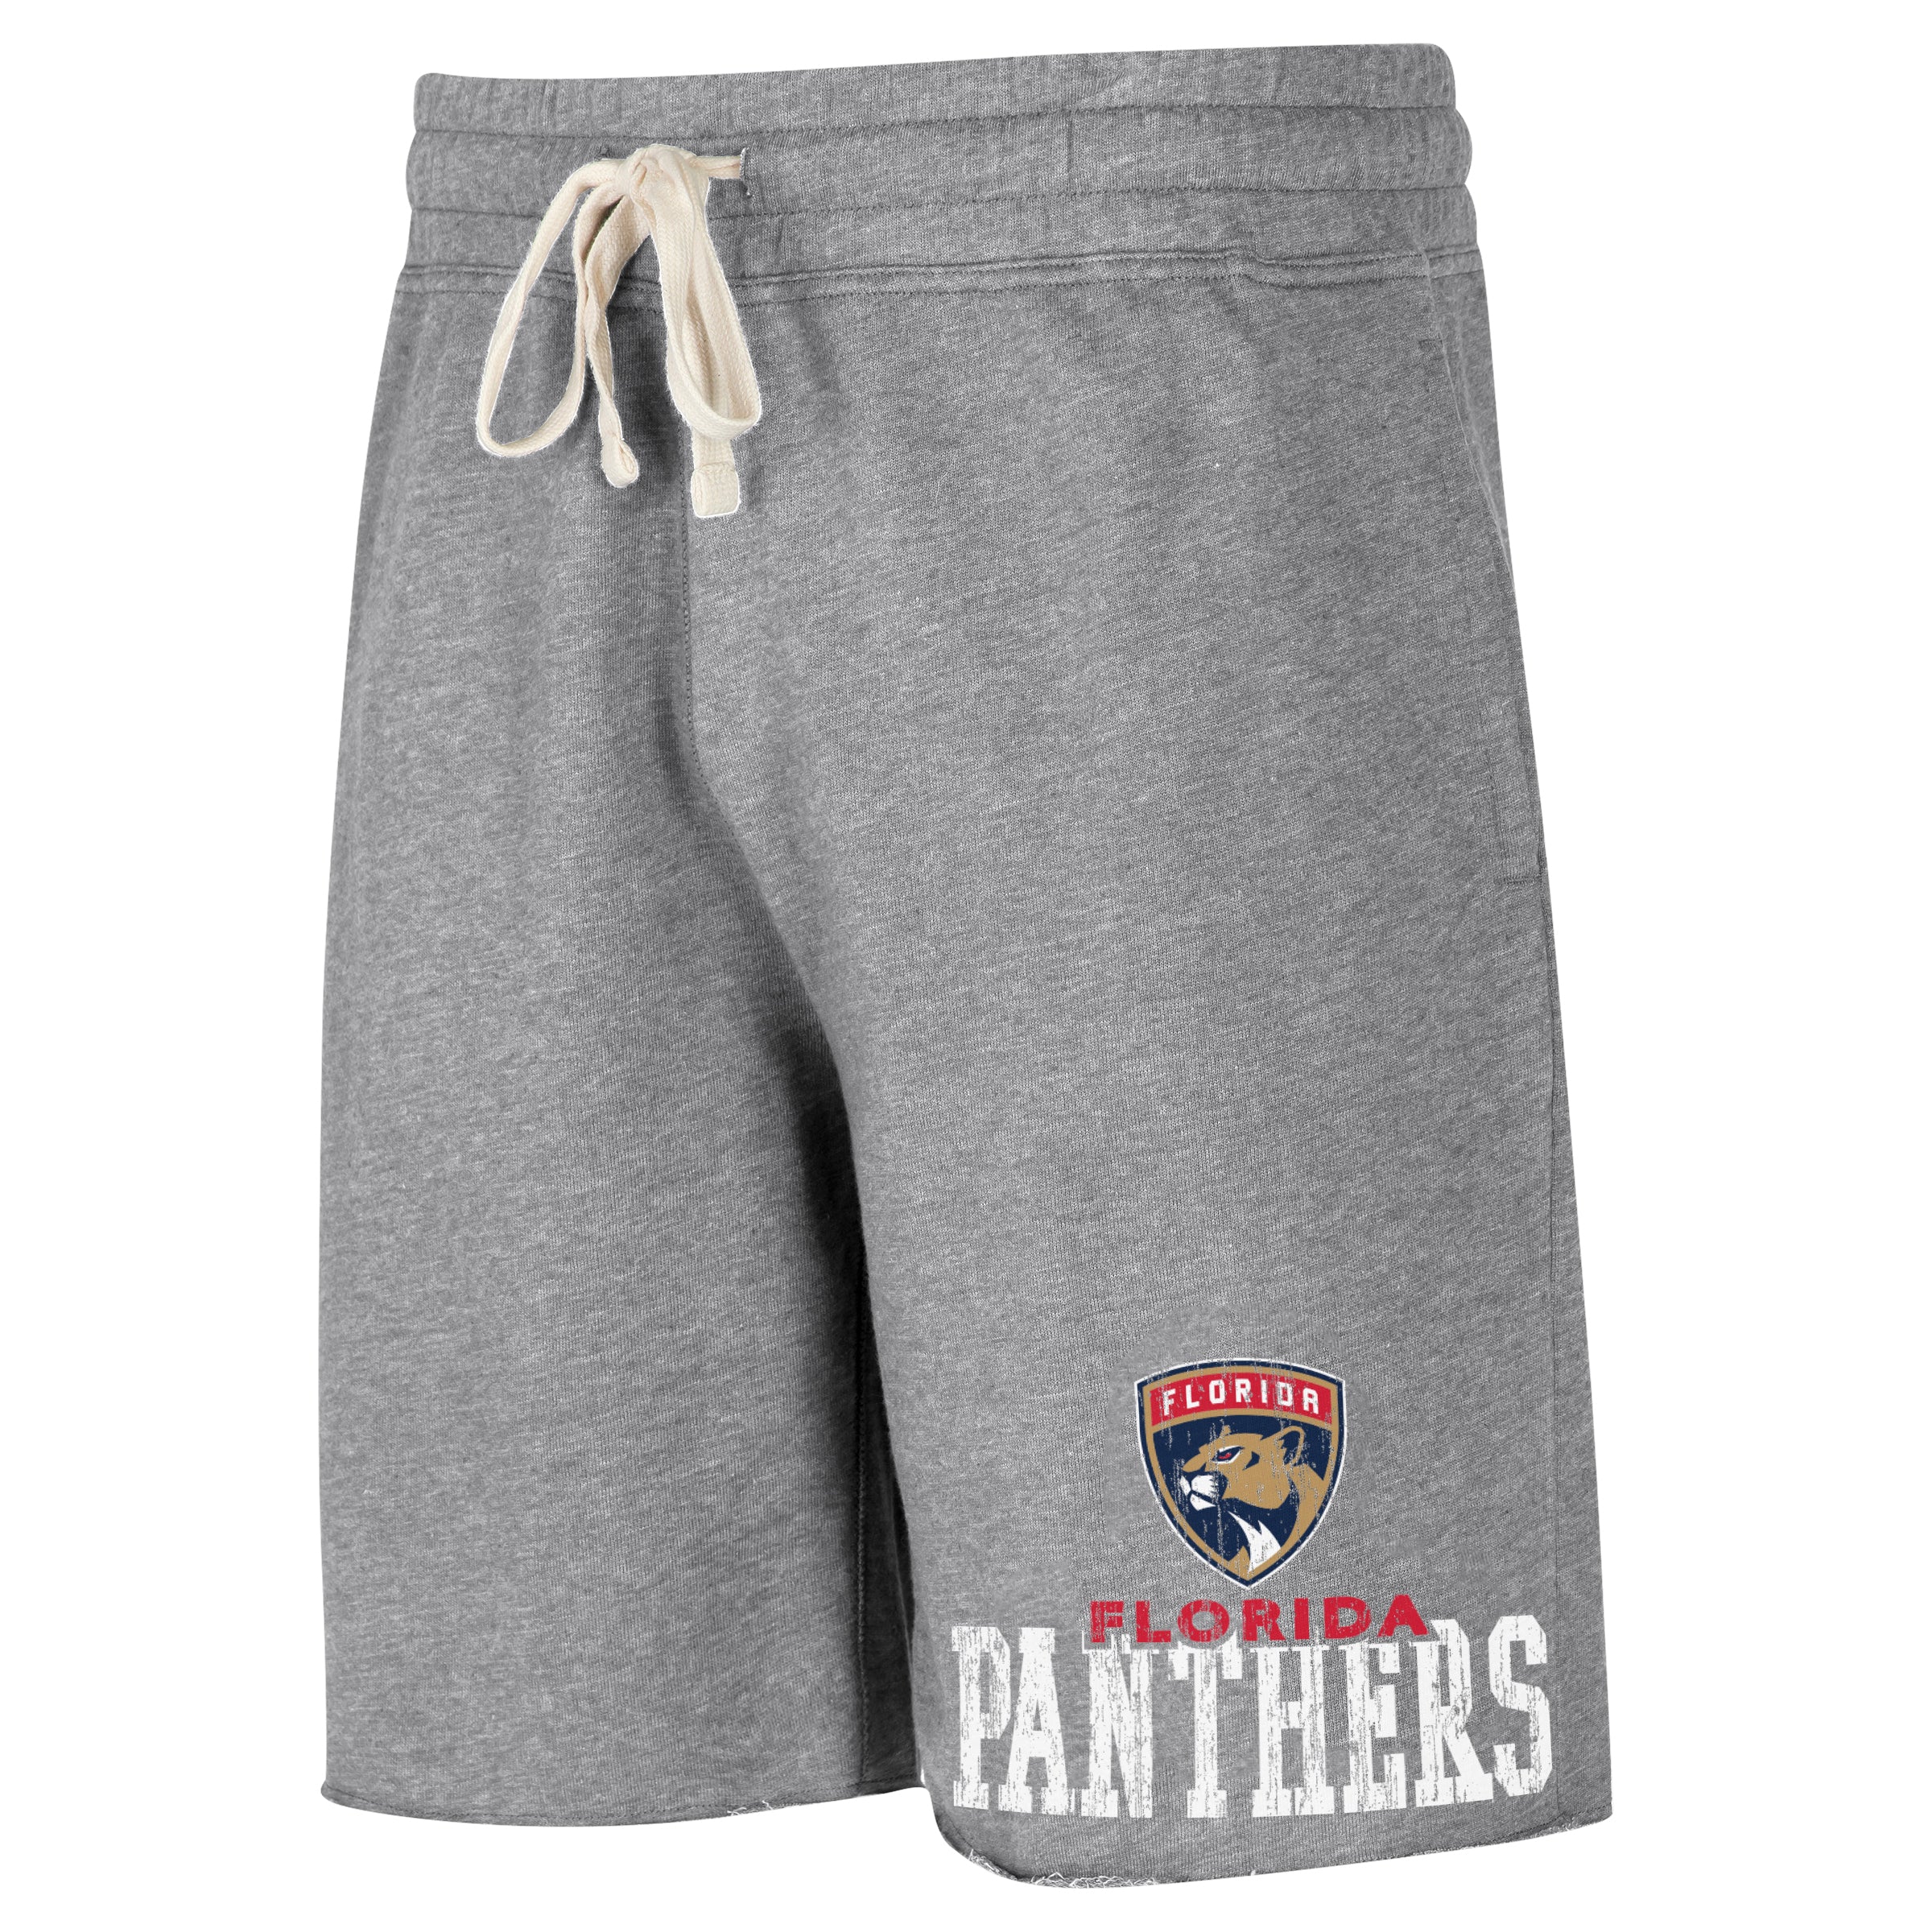 Florida Panthers Mainstream Terry Shorts - Grey